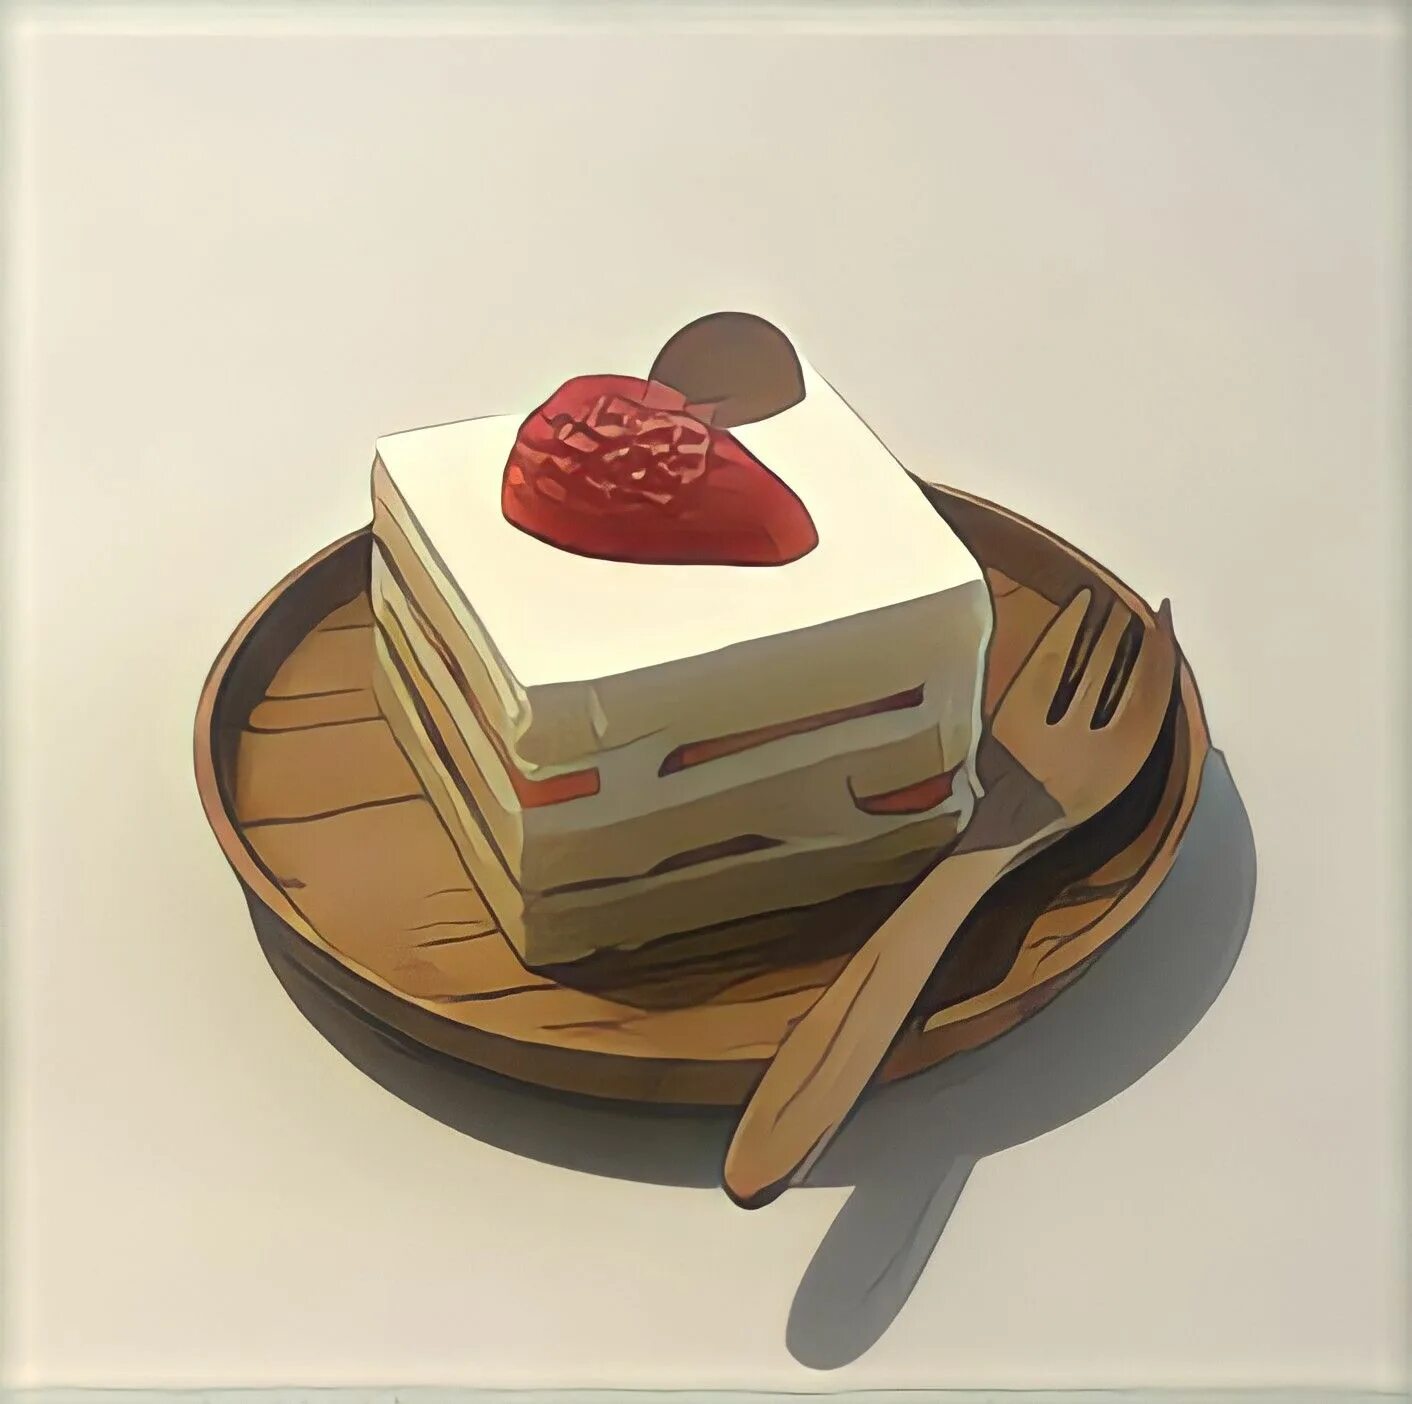 A little cake. Dessert aesthetic. Little Cake 2022. Little Cake. Photo Strawberry Cake on a Wood.